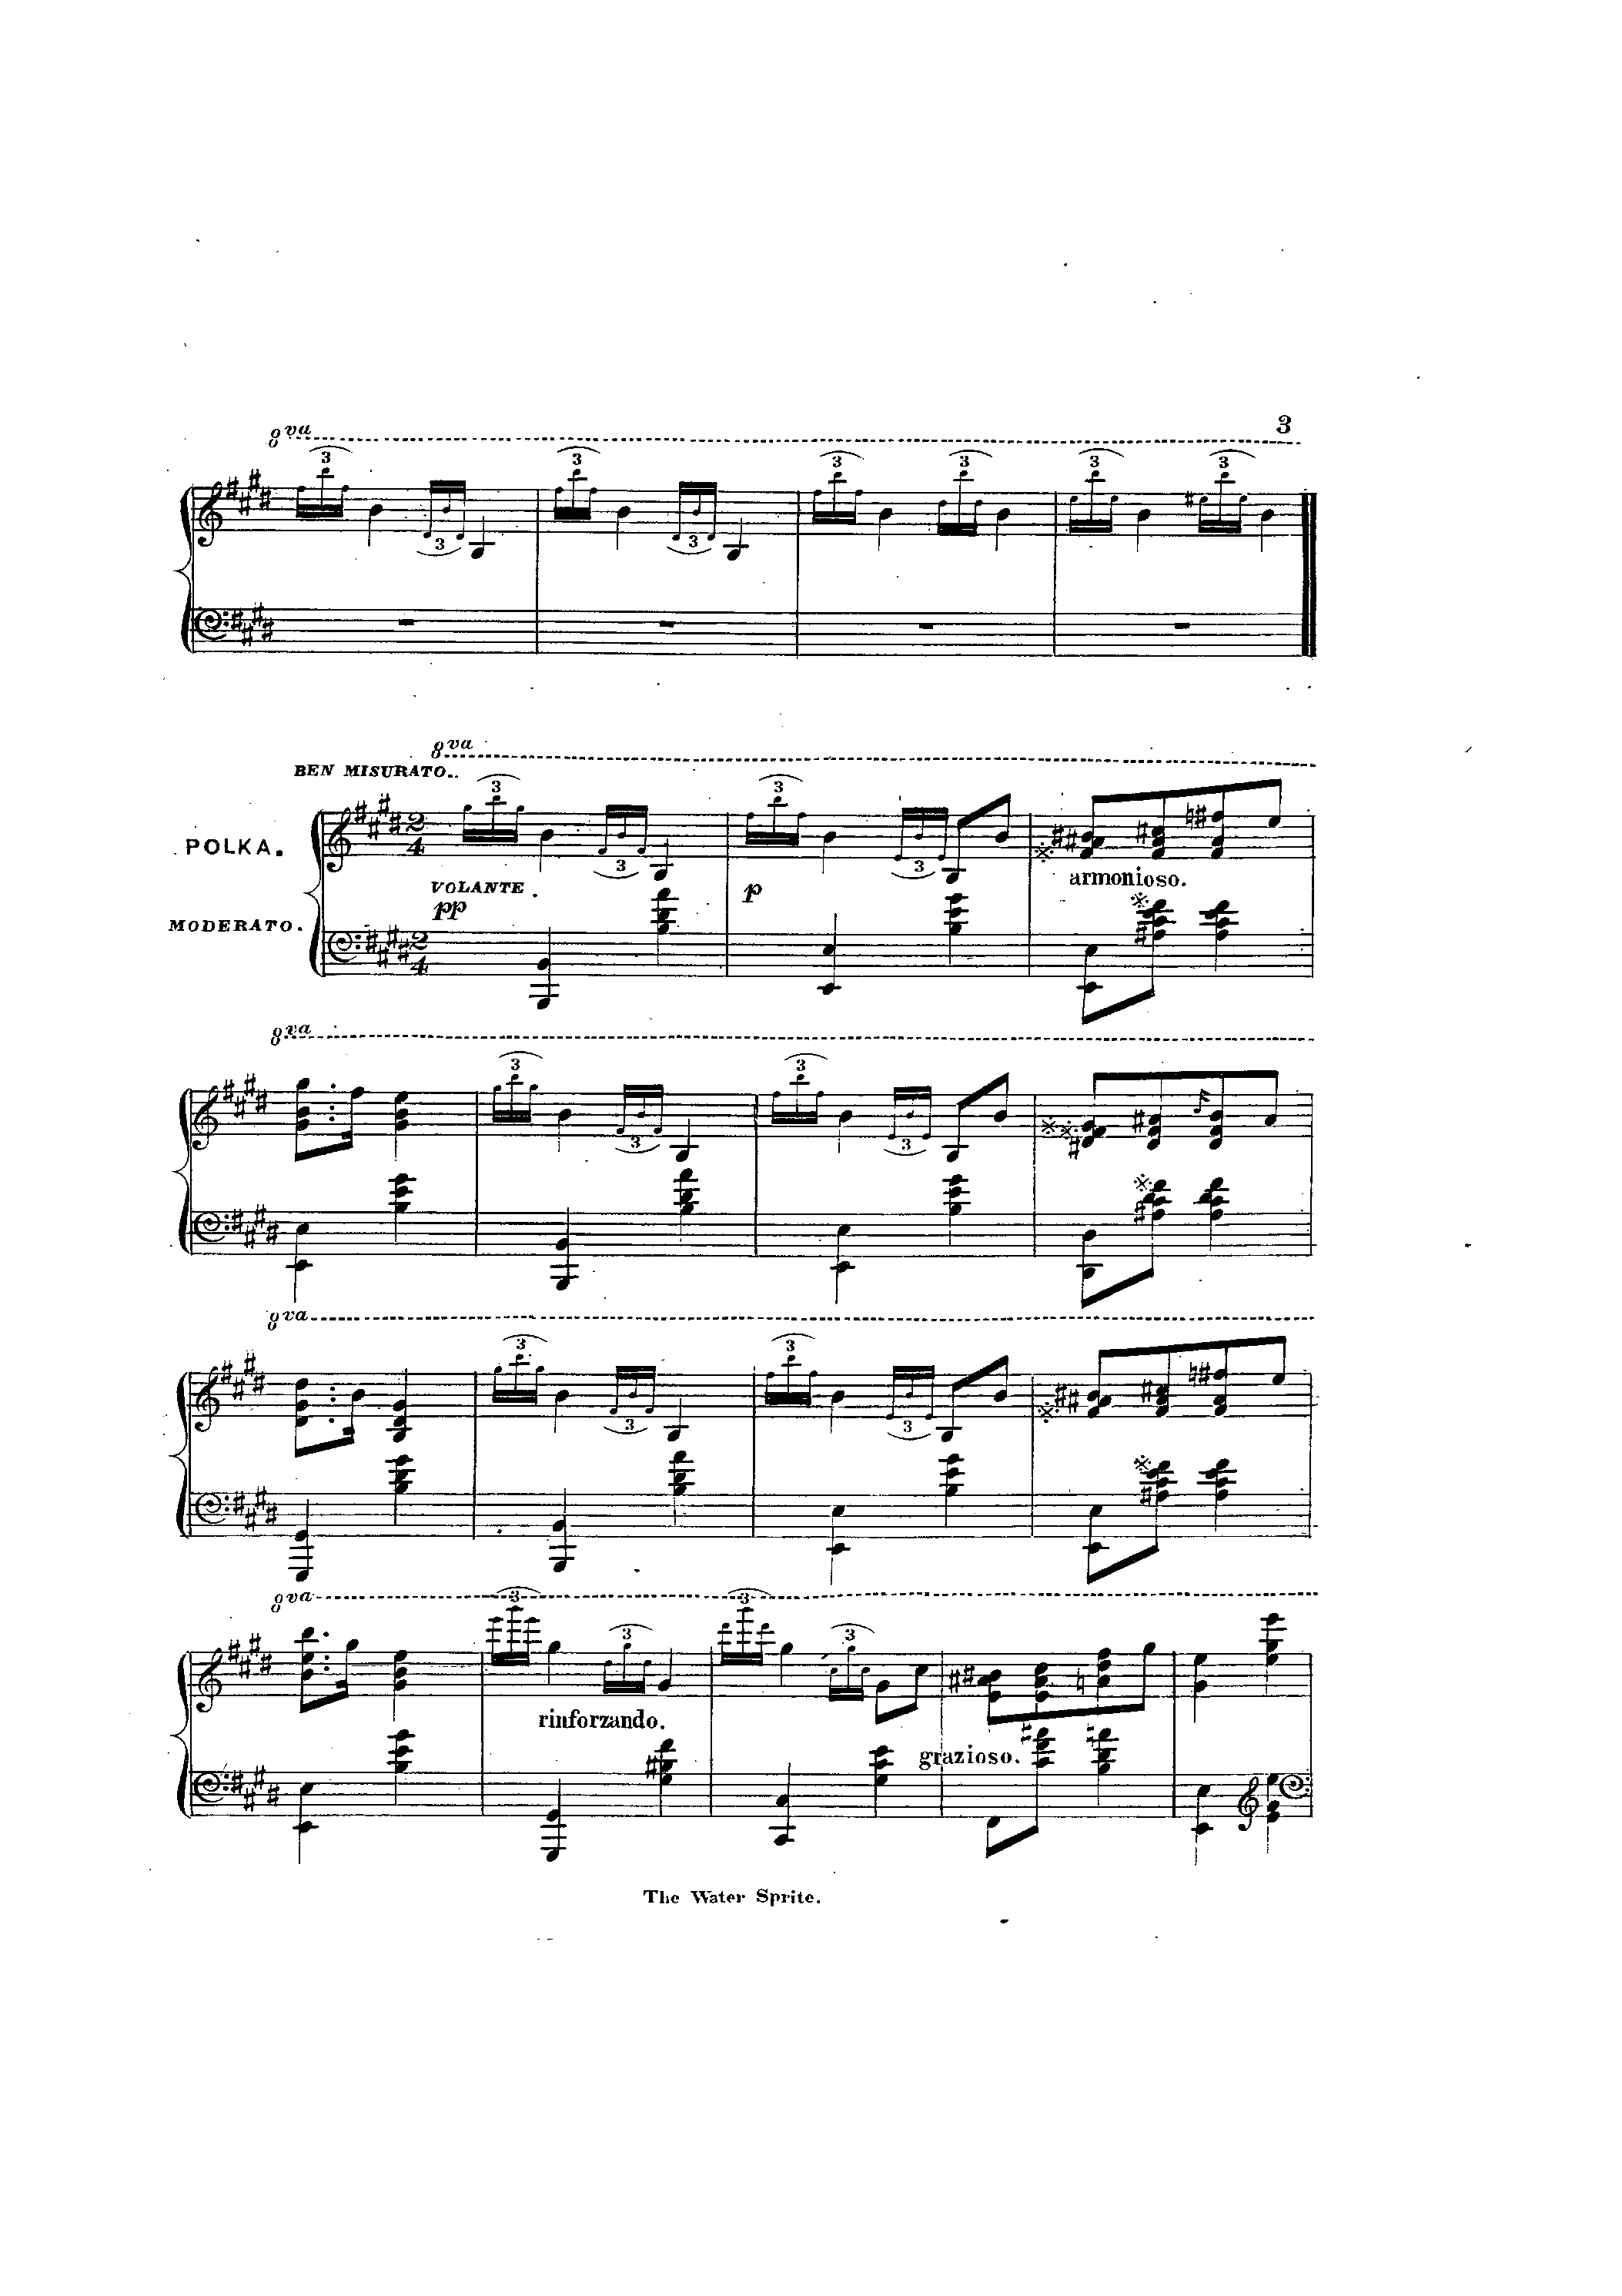 Gottschalk, Louis - The Water Sprite, Op.27 Sheet music for Piano ...